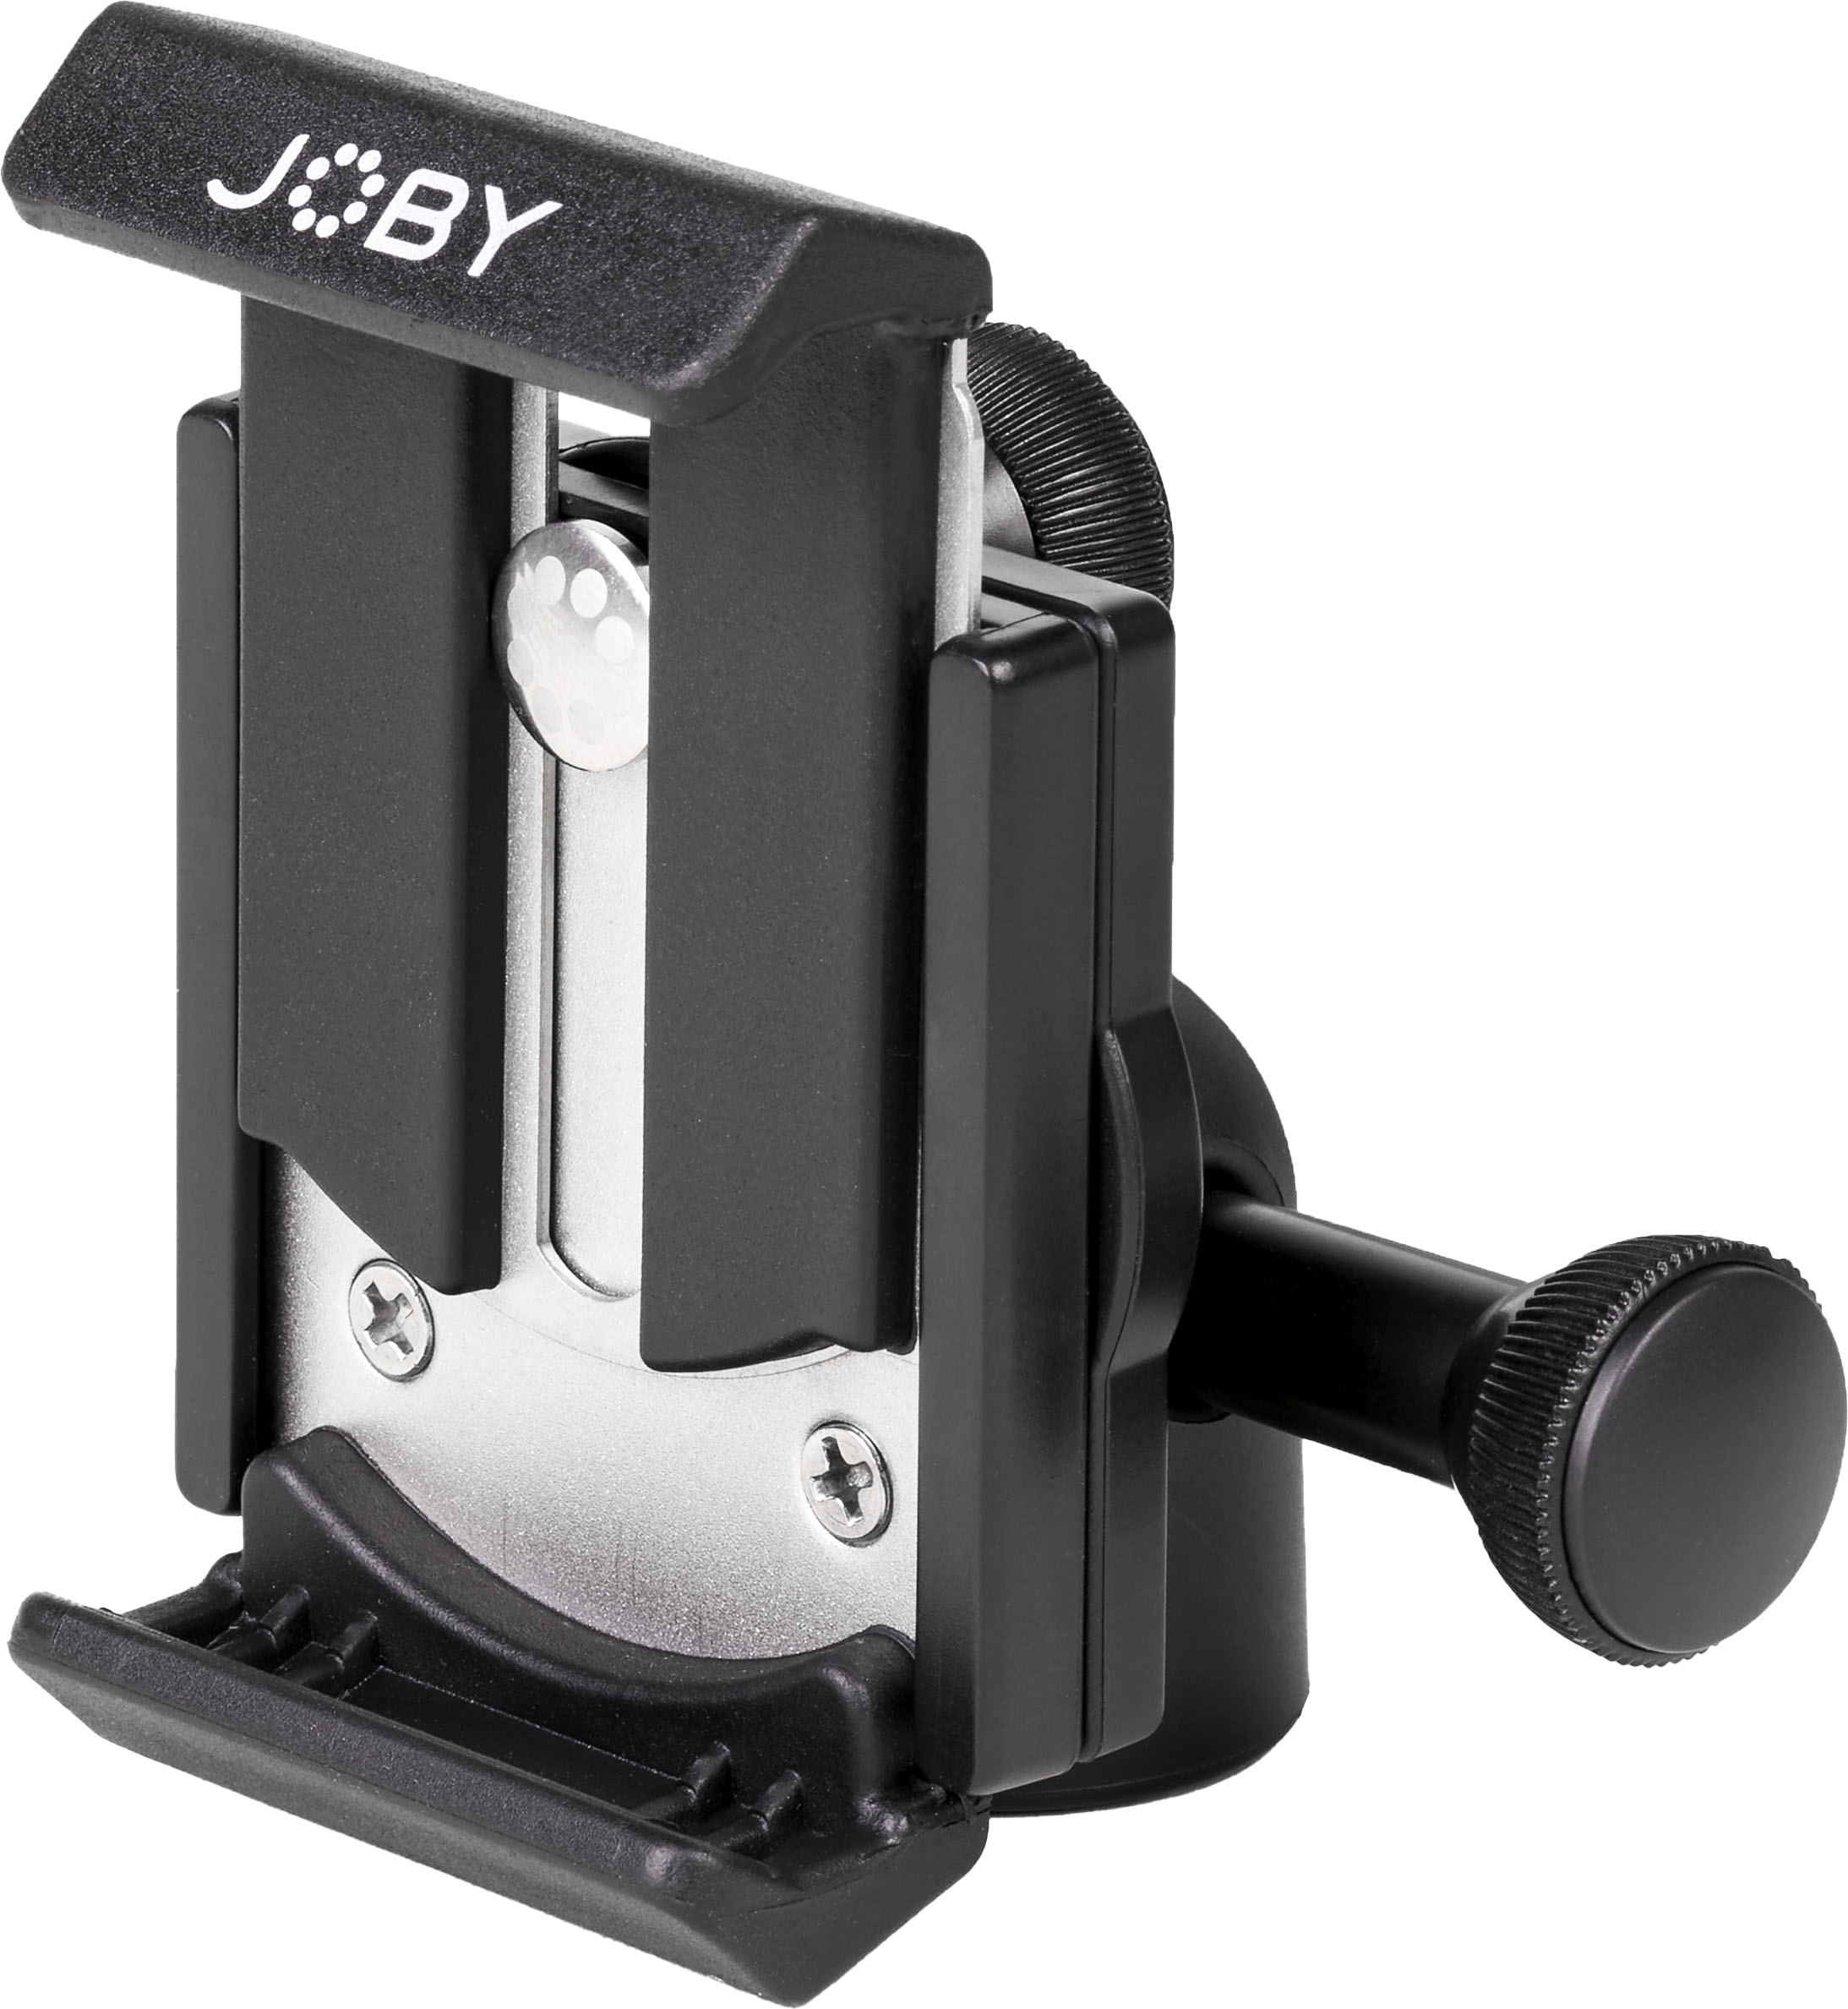 Joby GripTight Mount Pro for Smartphone